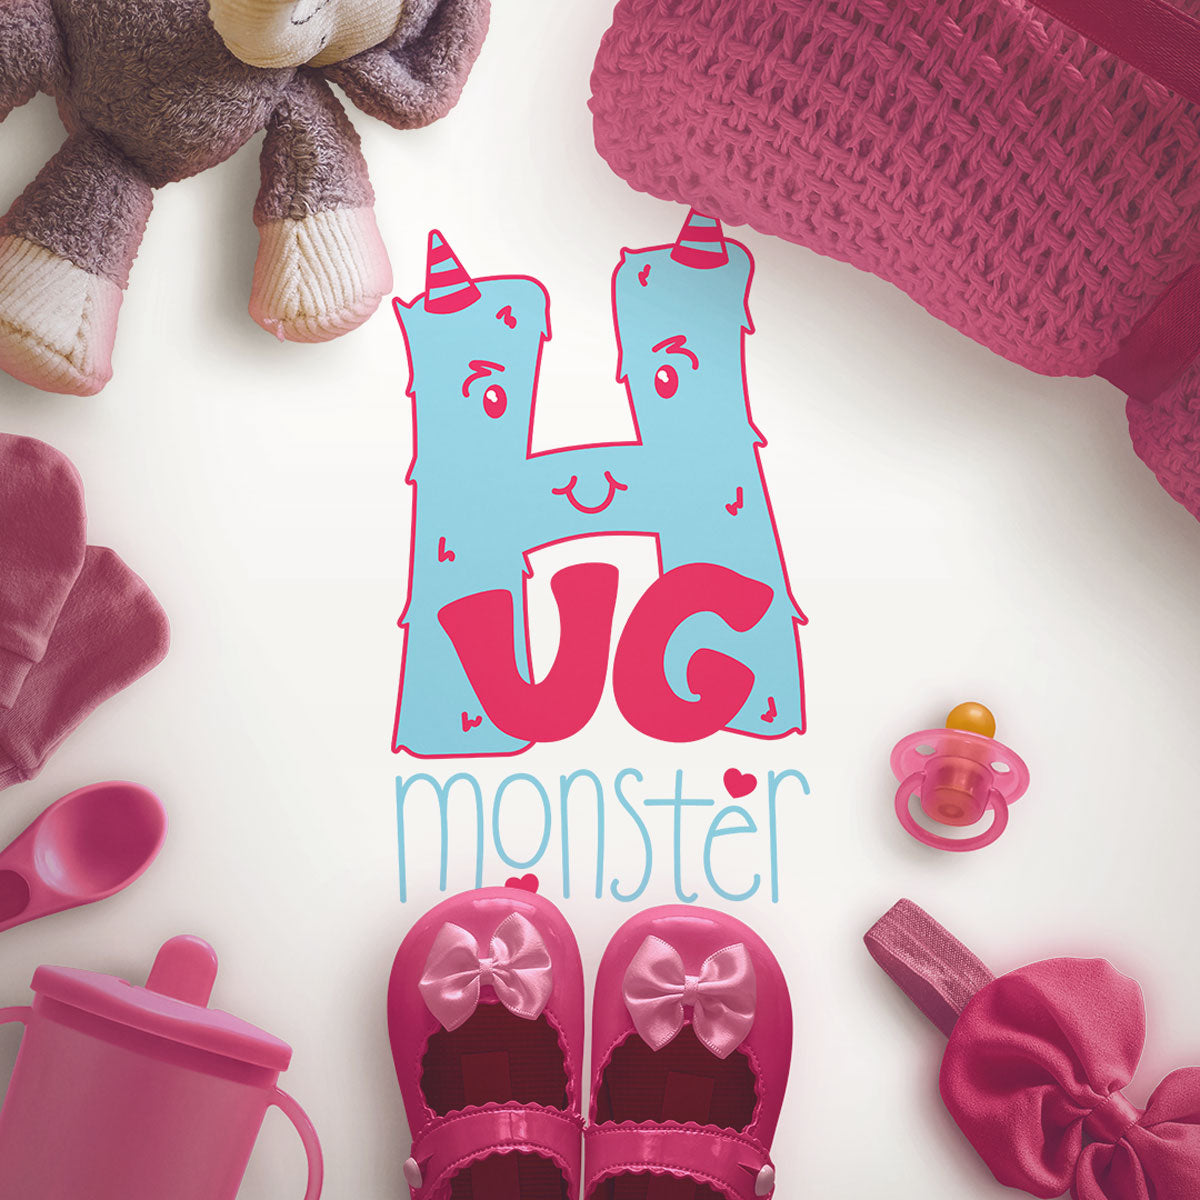 Freebie Friday SVG - Hug Monster hand lettered cute little monster H with horns